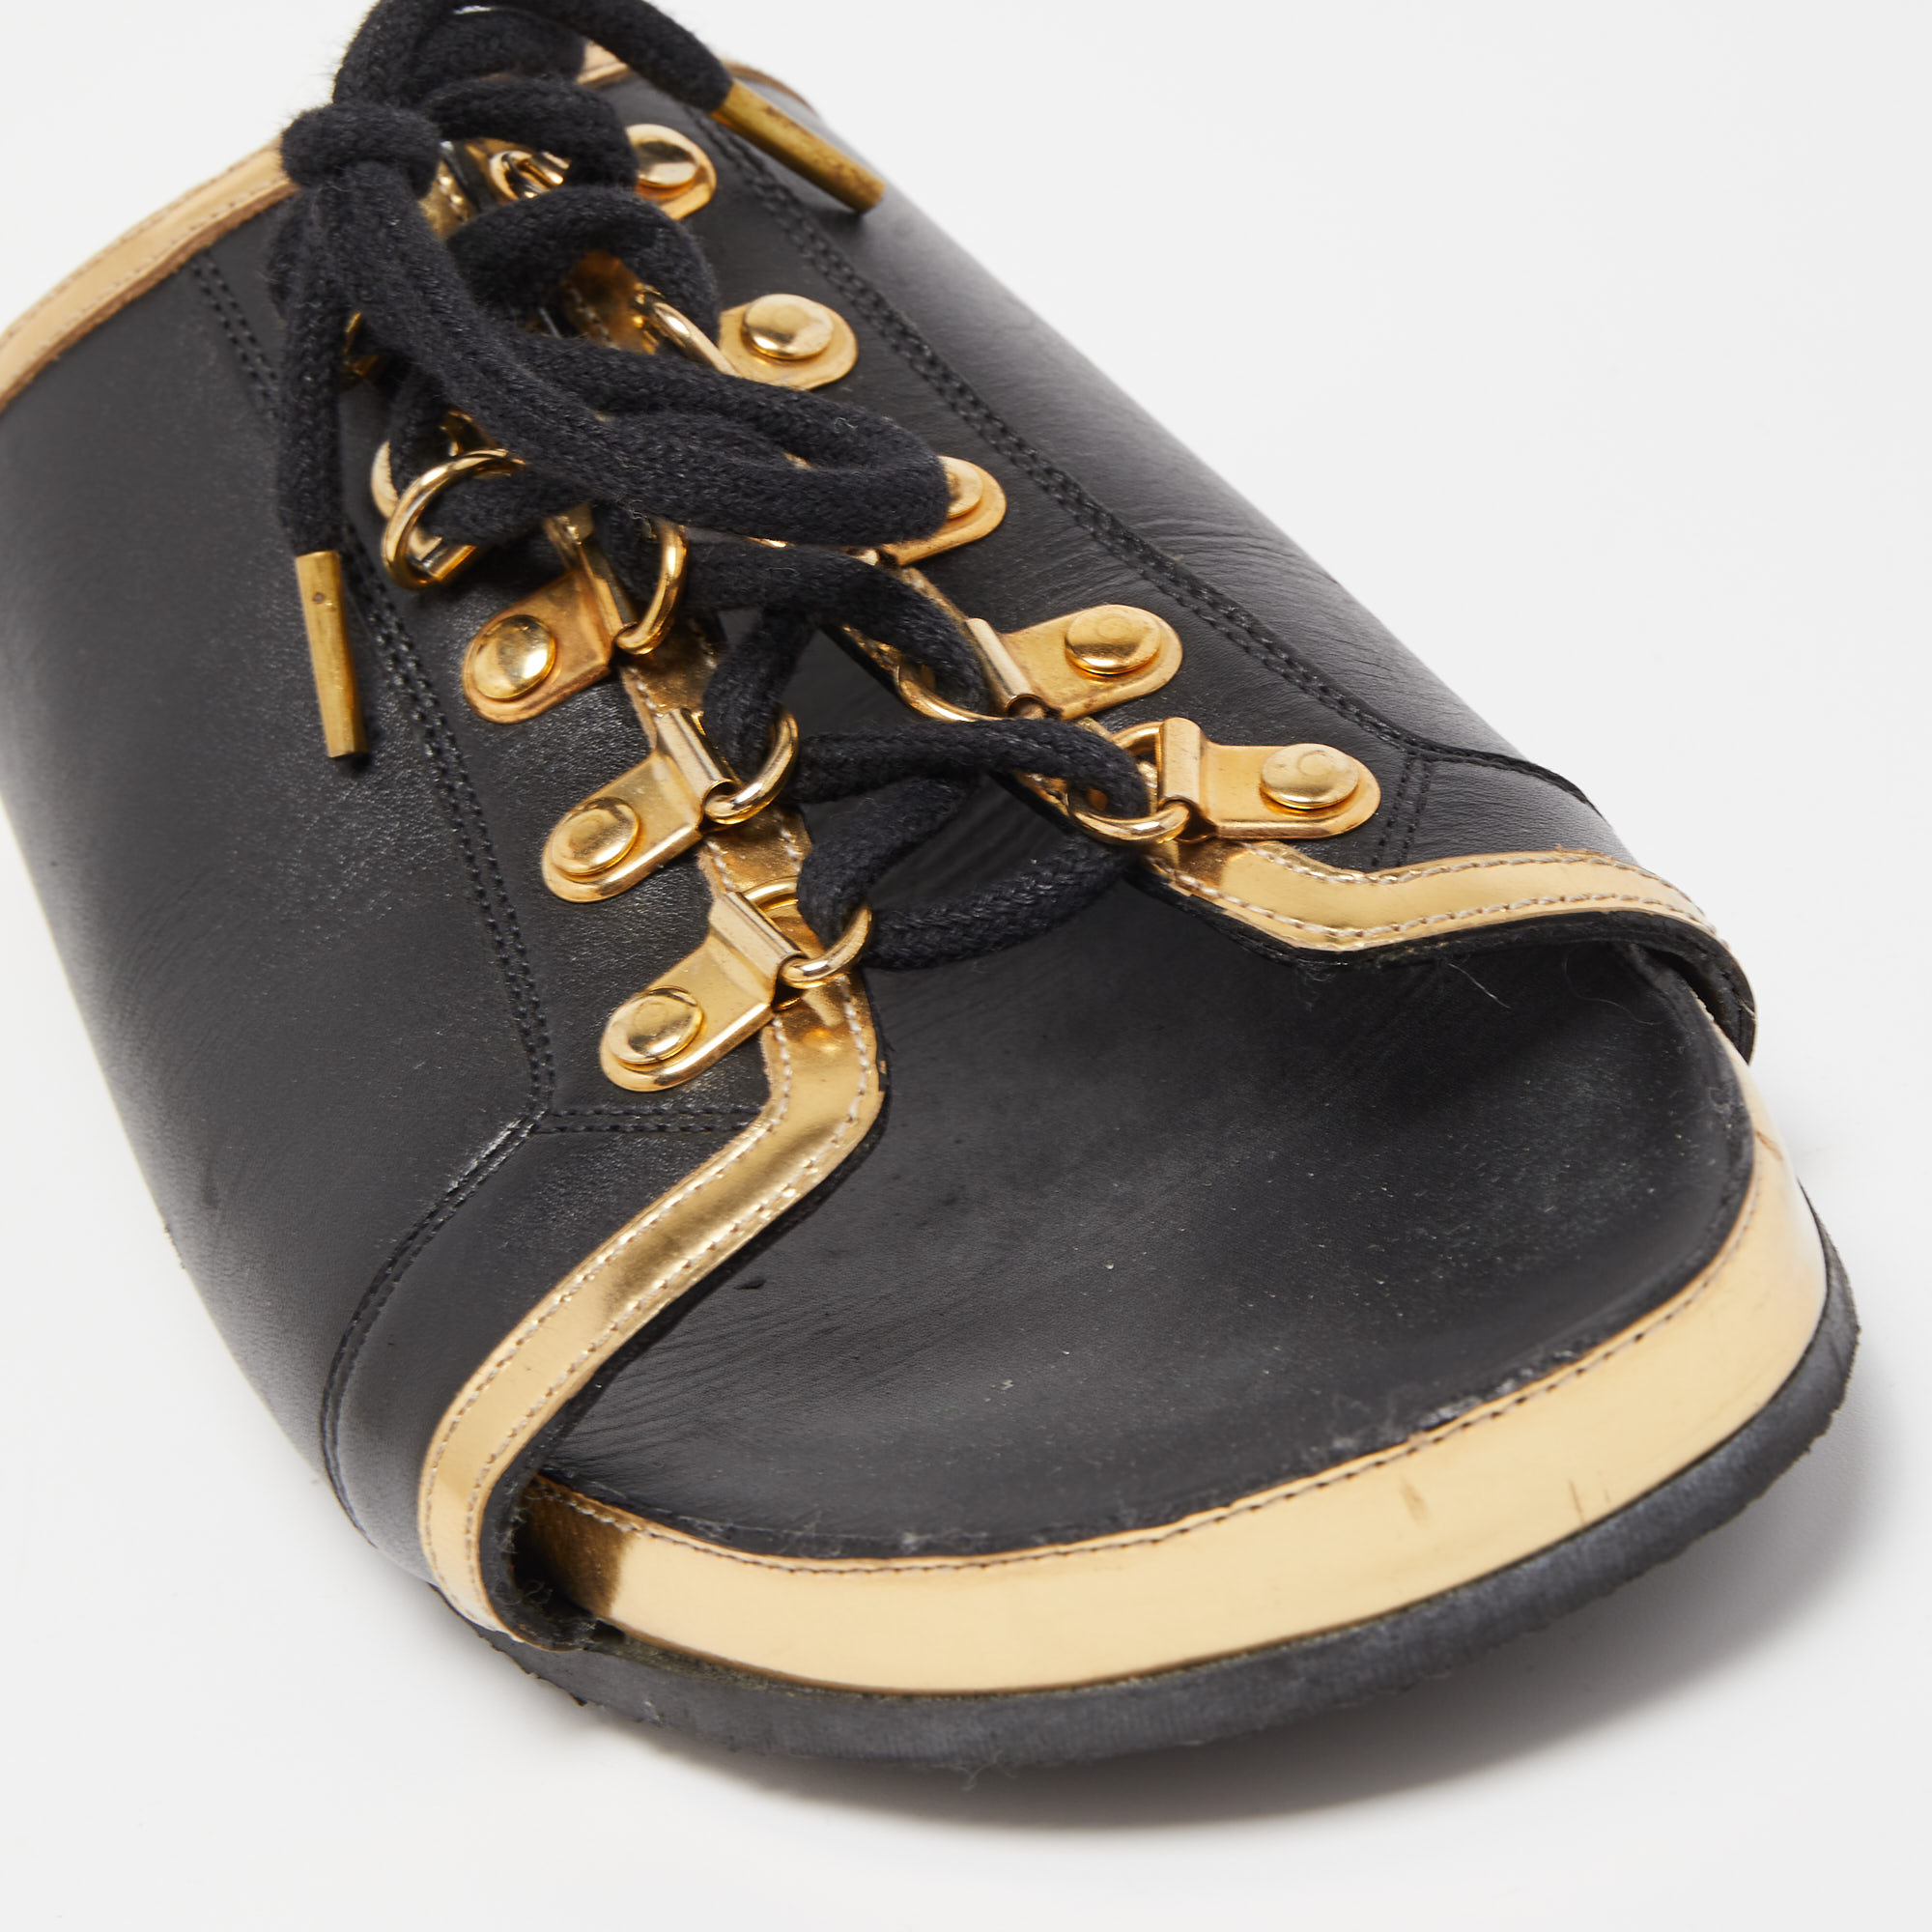 Balmain Black/Gold Leather Lace Up Slides Size 39